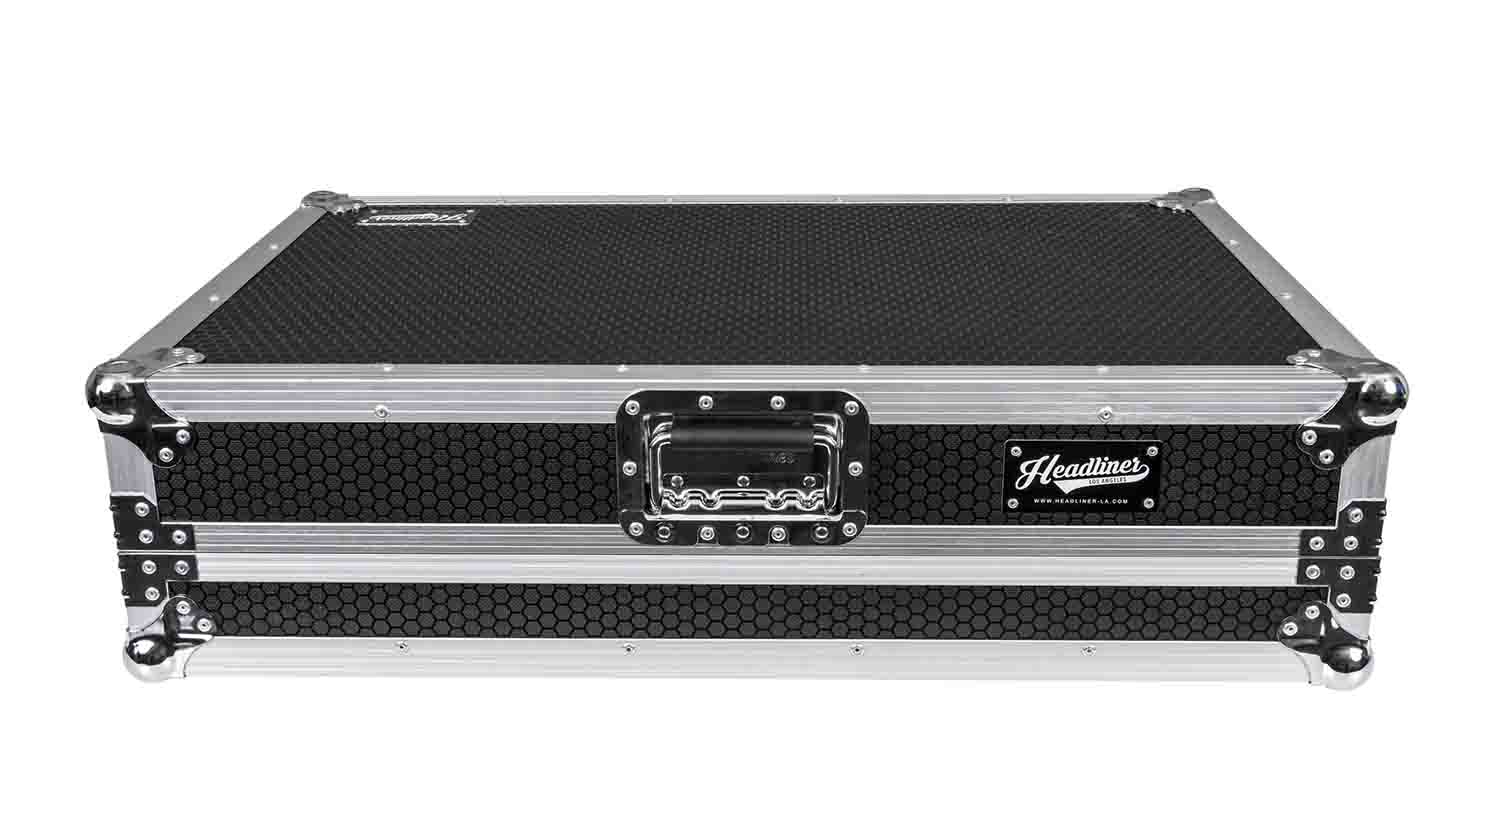 B-Stock: Headliner HL10007 Flight Case with Laptop Platform for Pioneer DJ Ddj-Rev7 - Hollywood DJ